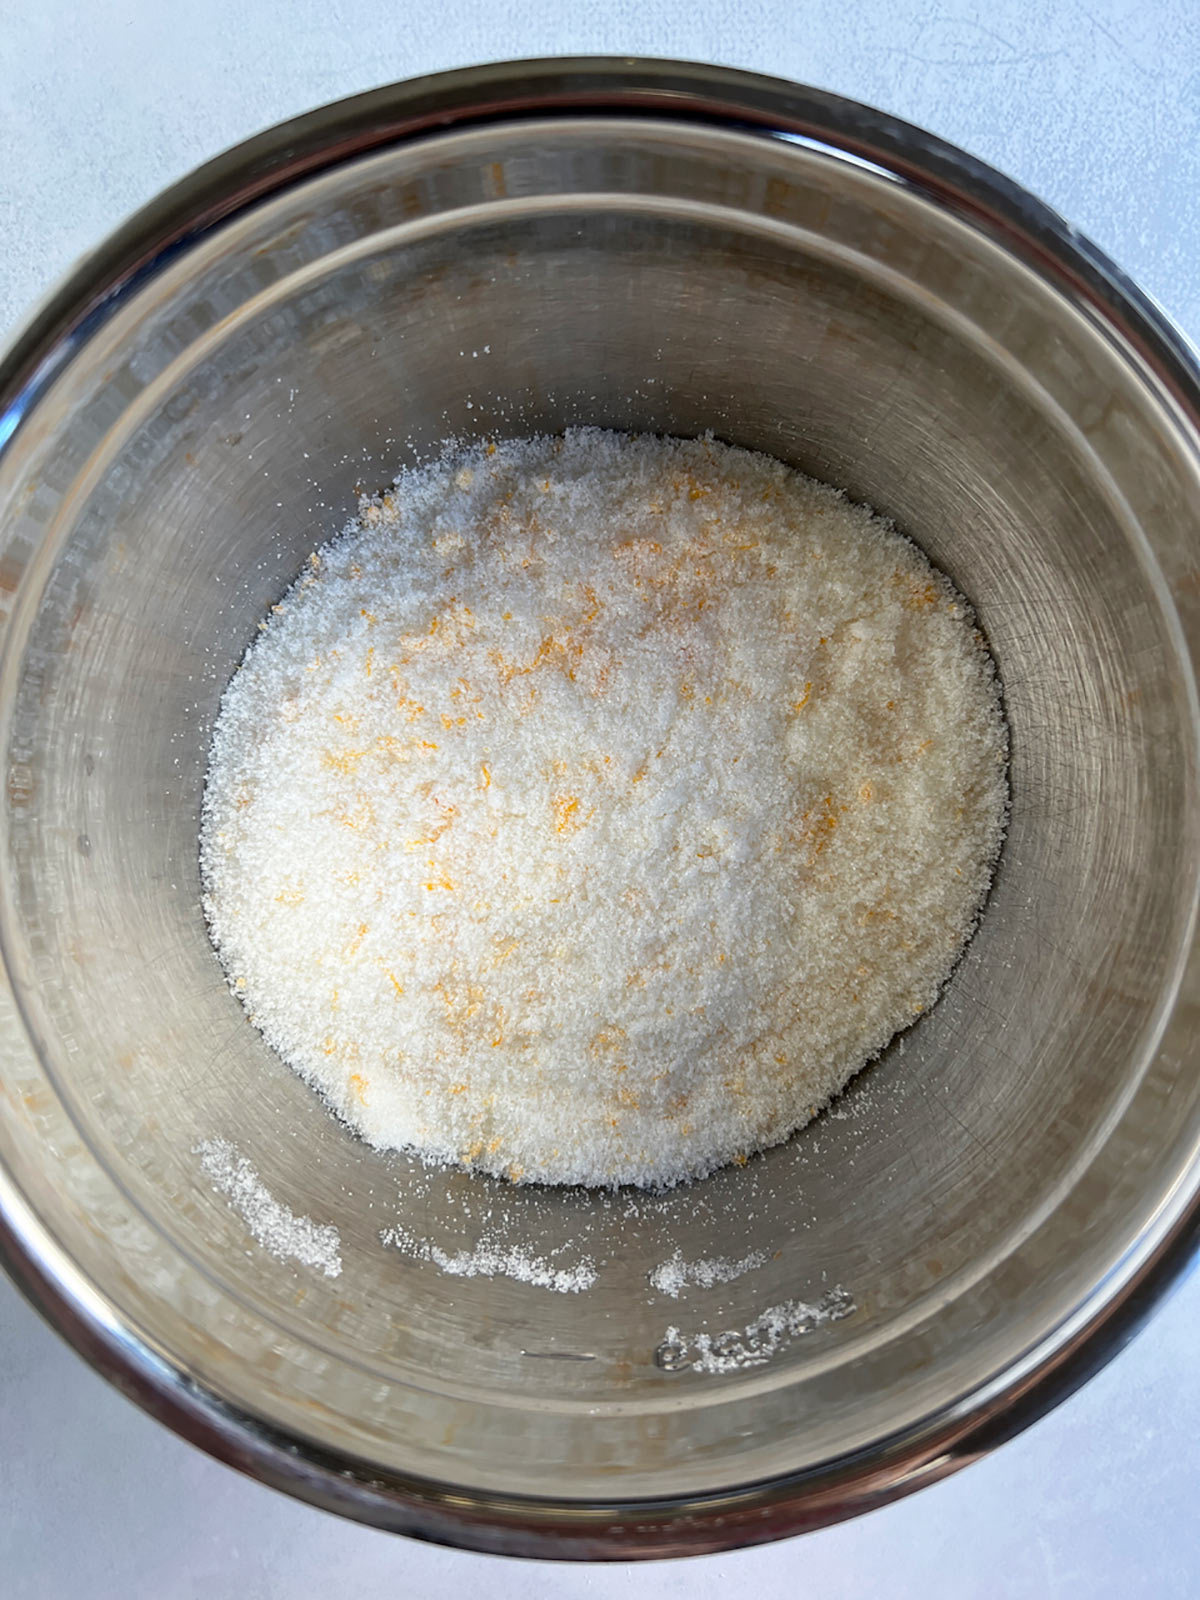 Orange zest mixed into granulated sugar.